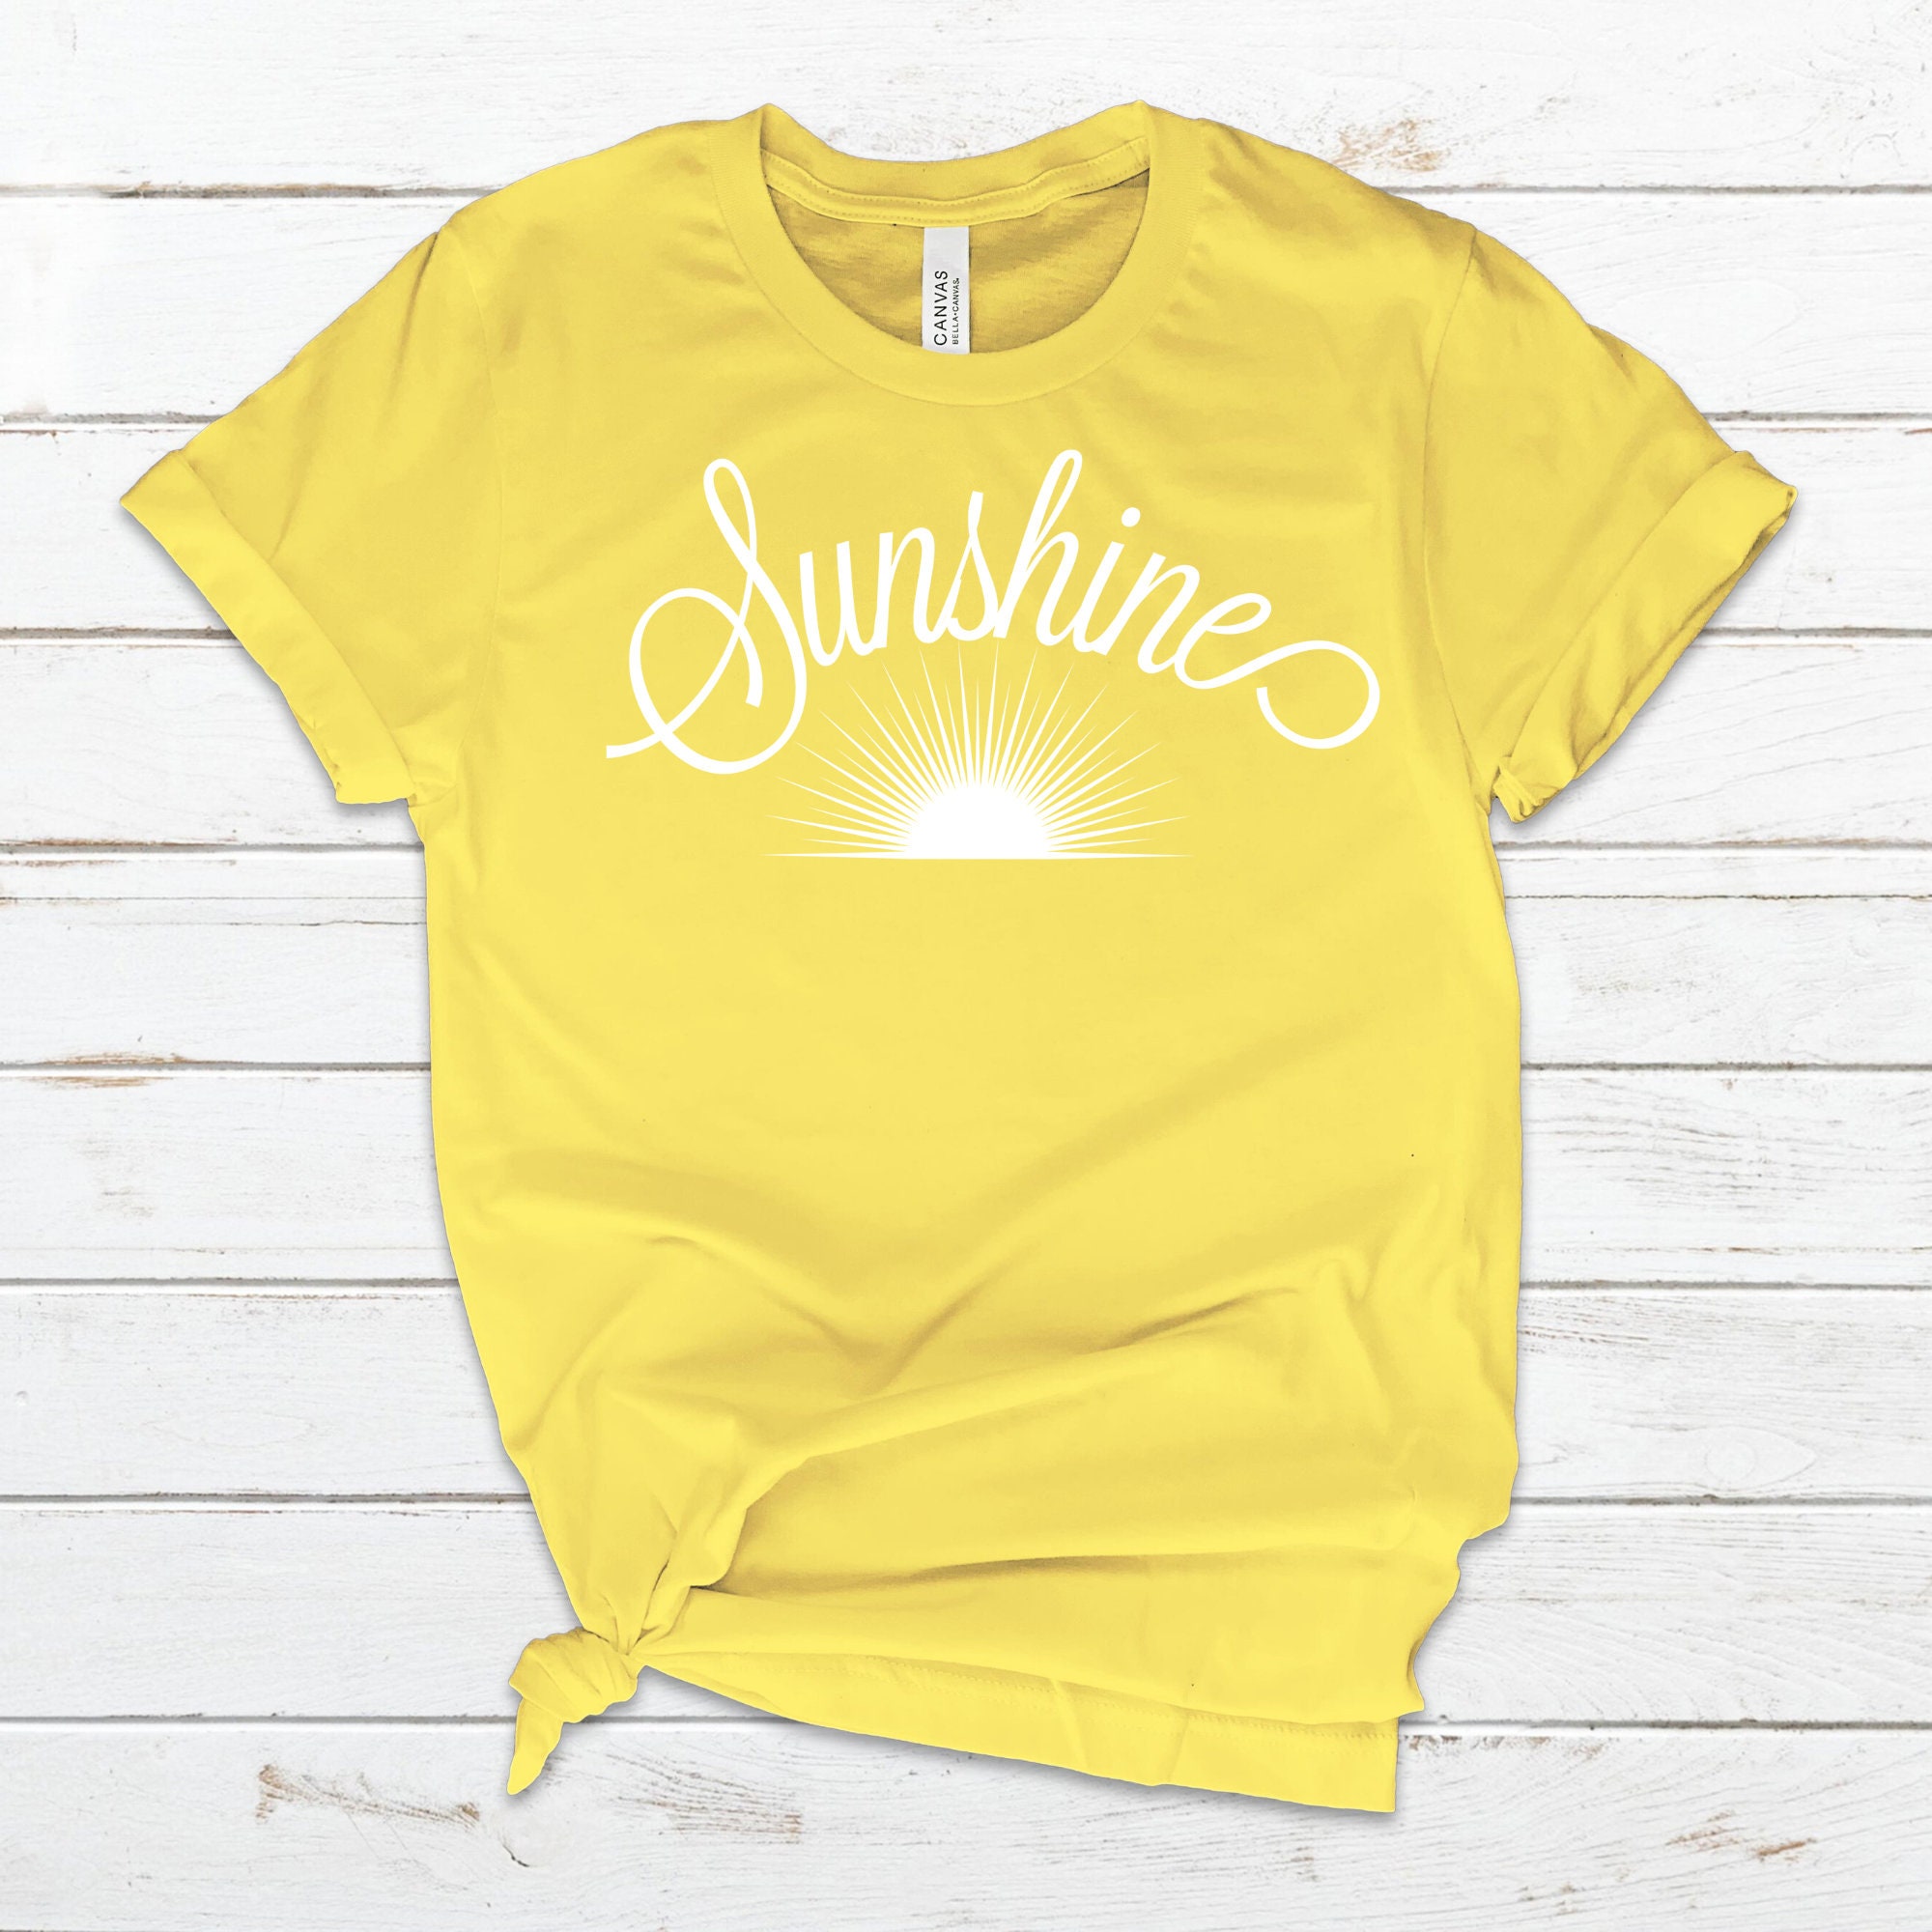 Sunshine Shirt Funny T-Shirt Casual T-Shirt Graphic Tee | Etsy